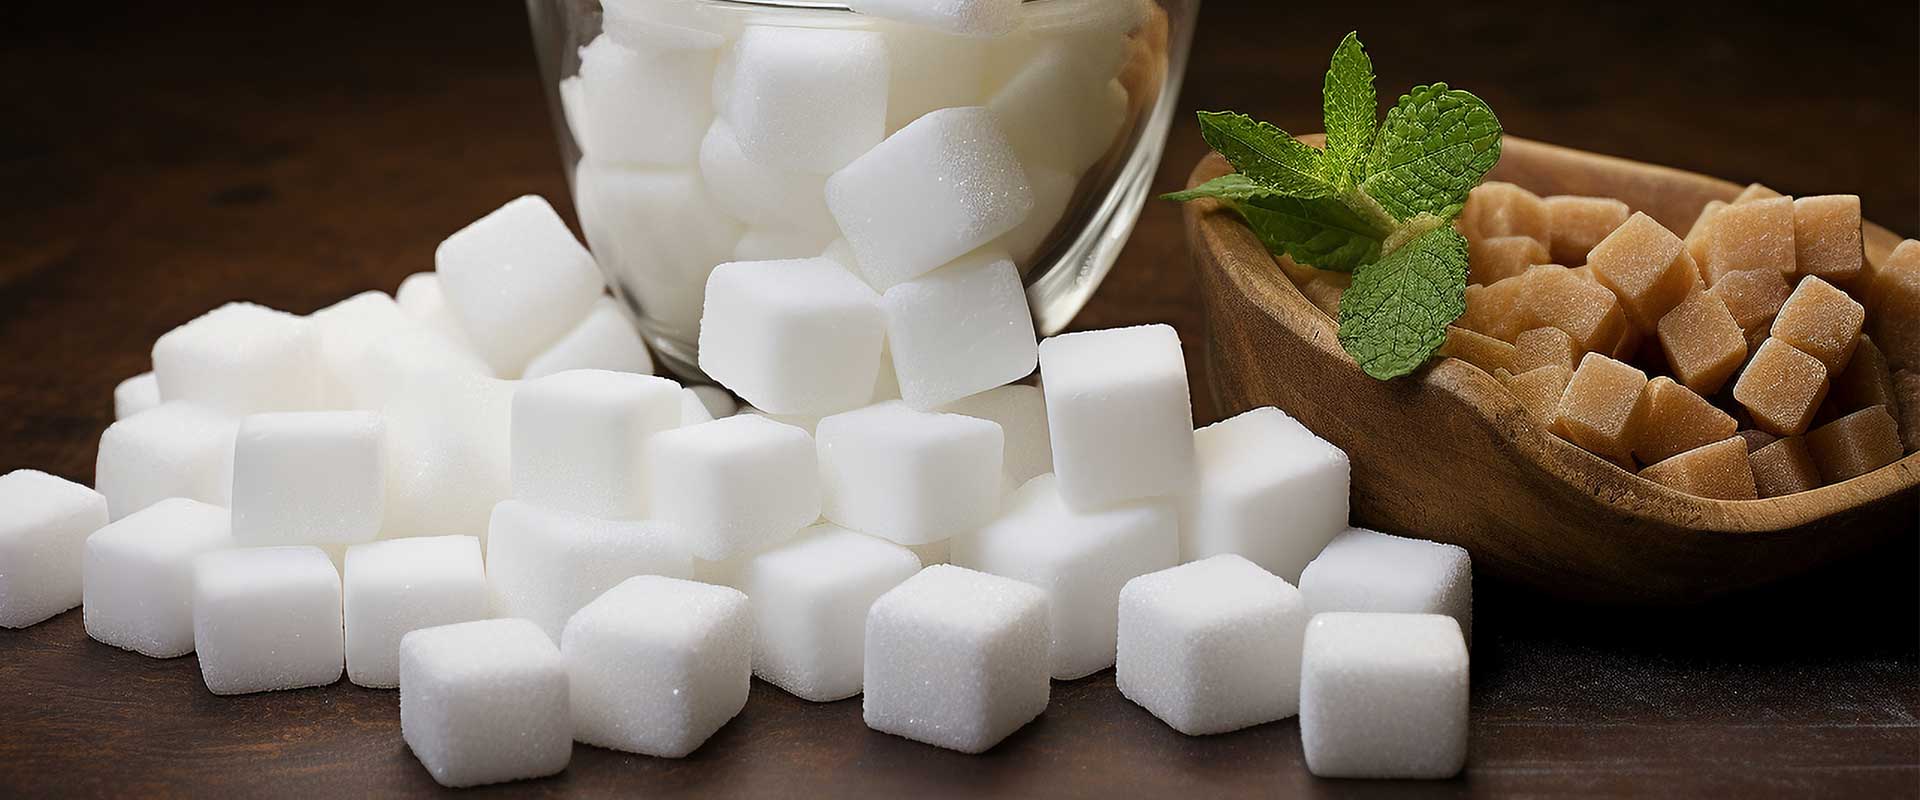 Sugar Cube Production Line